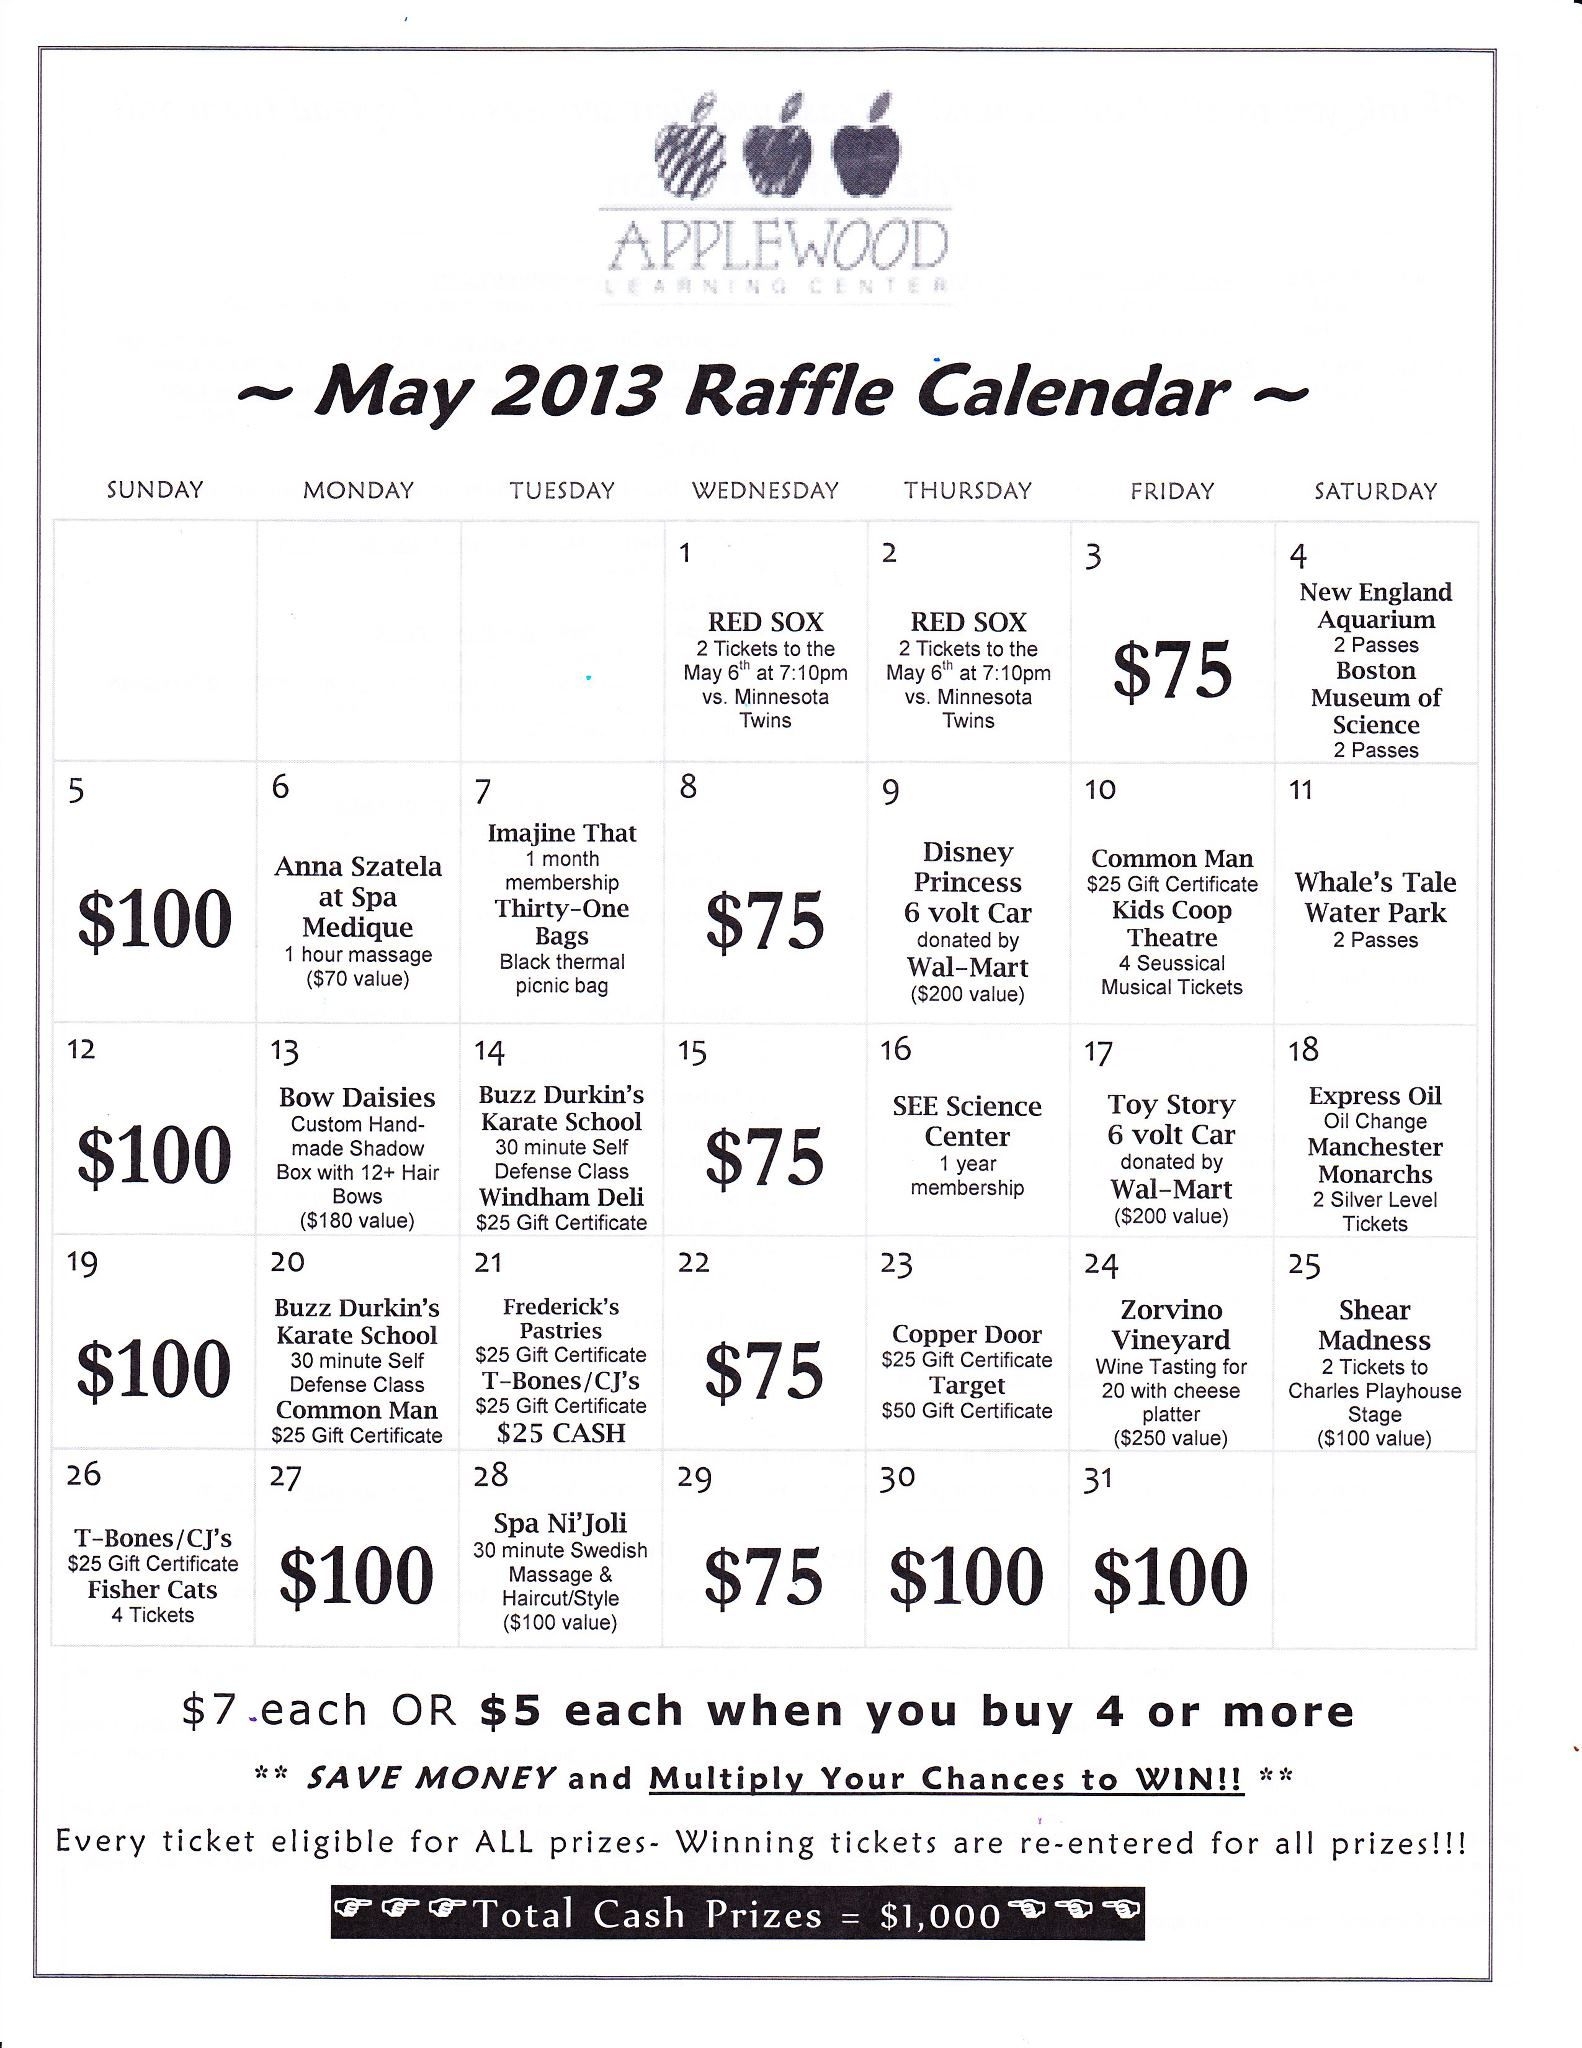 Annual Raffle Calendar Fundraiser | Applewood Learning Center